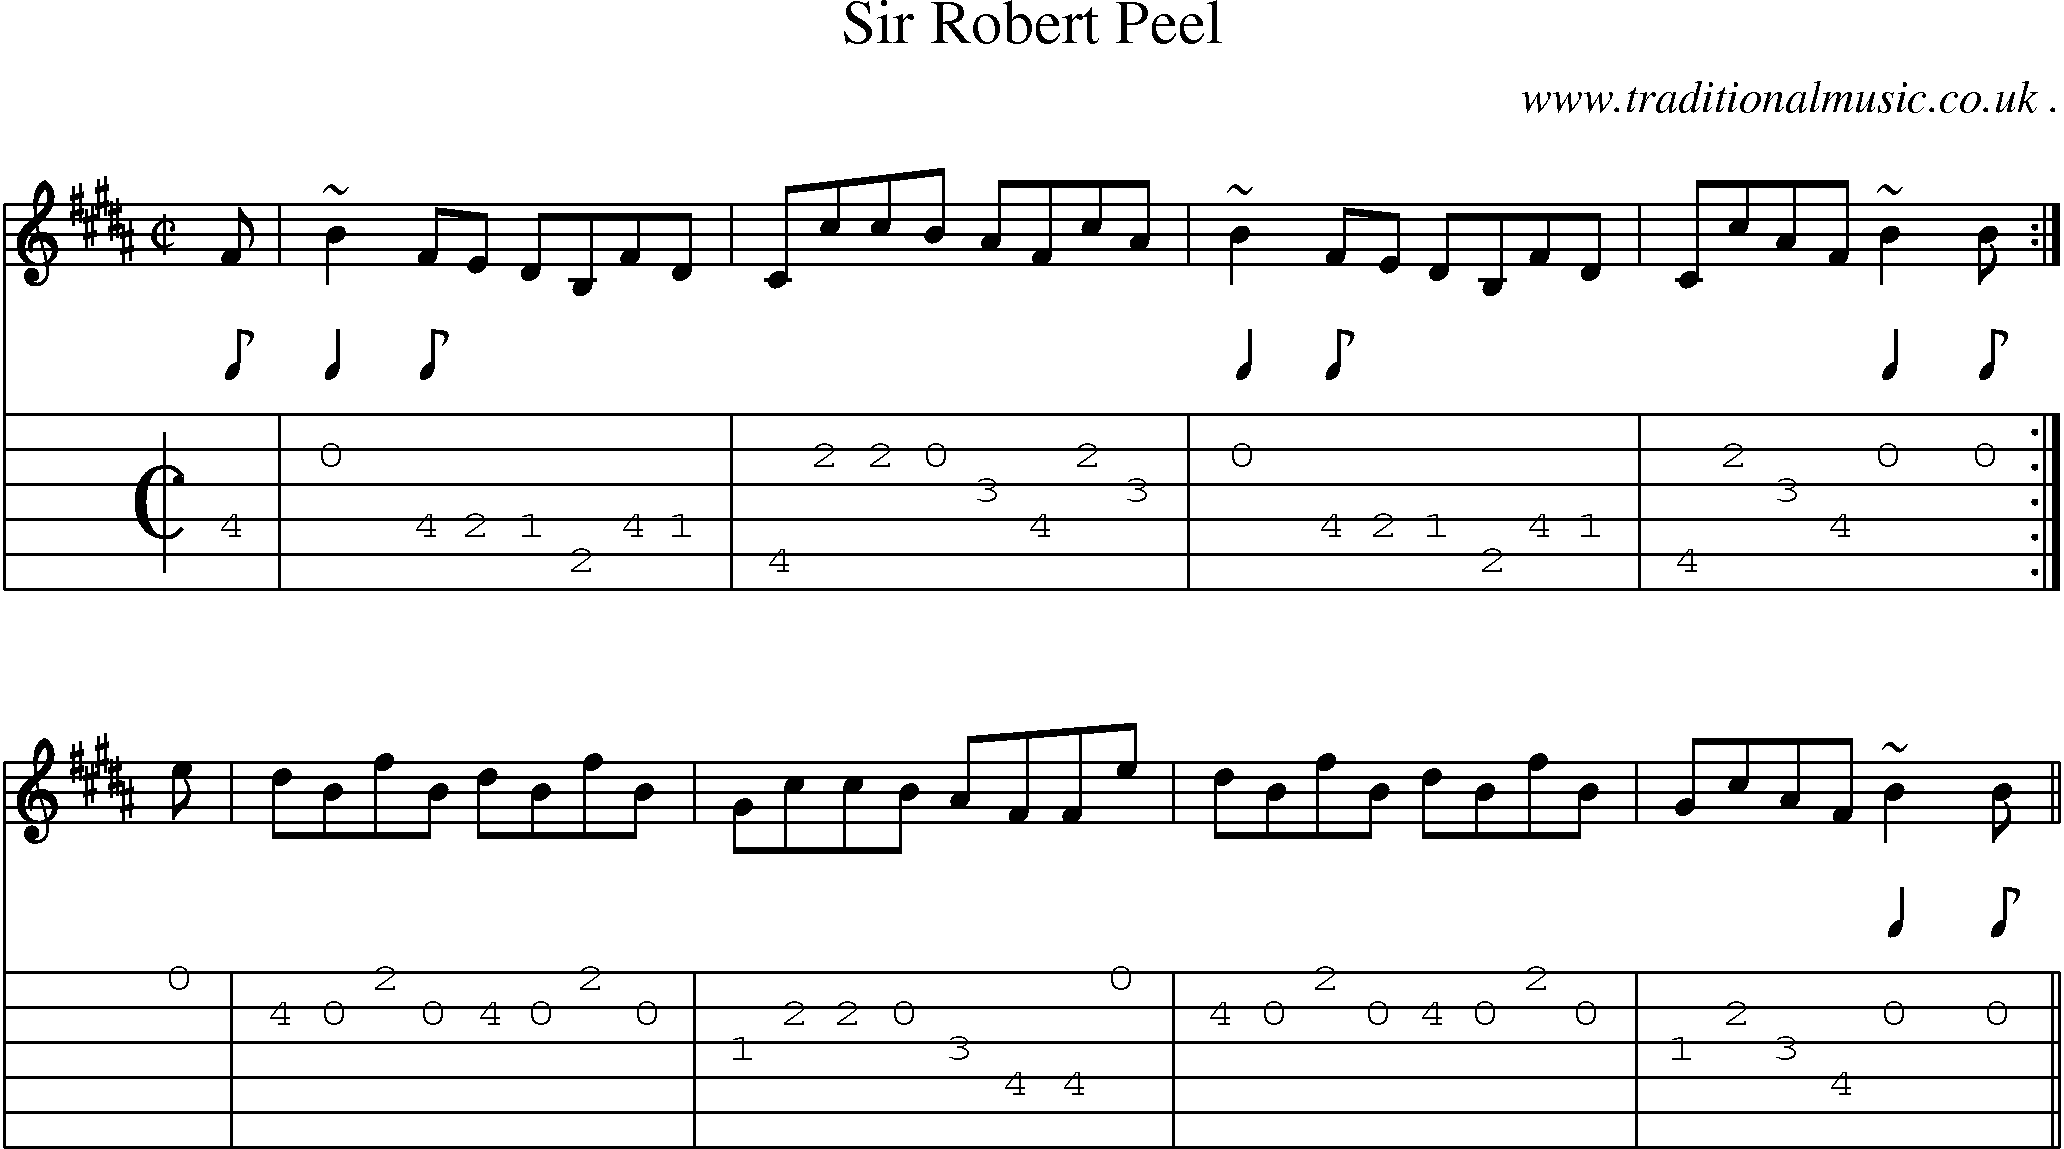 Sheet-music  score, Chords and Guitar Tabs for Sir Robert Peel